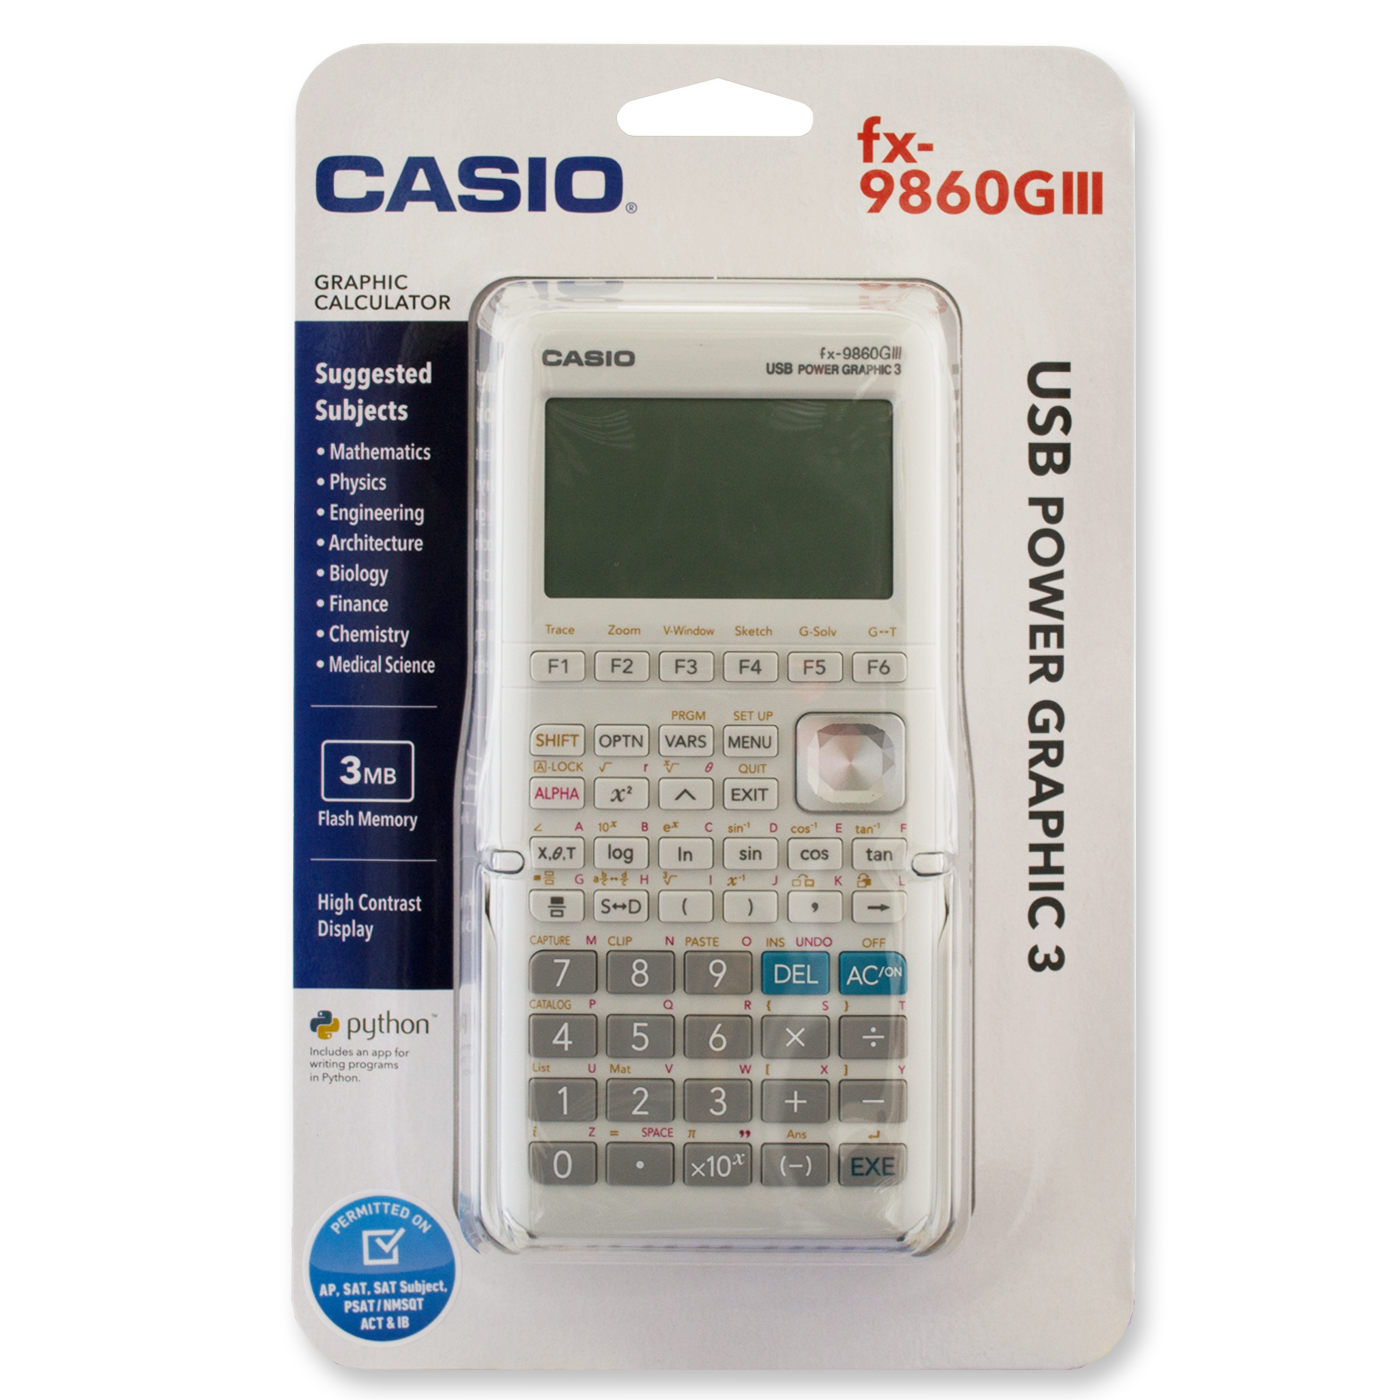 Casio FX9860GIII Graphic Calculator White Hangsell Packaging